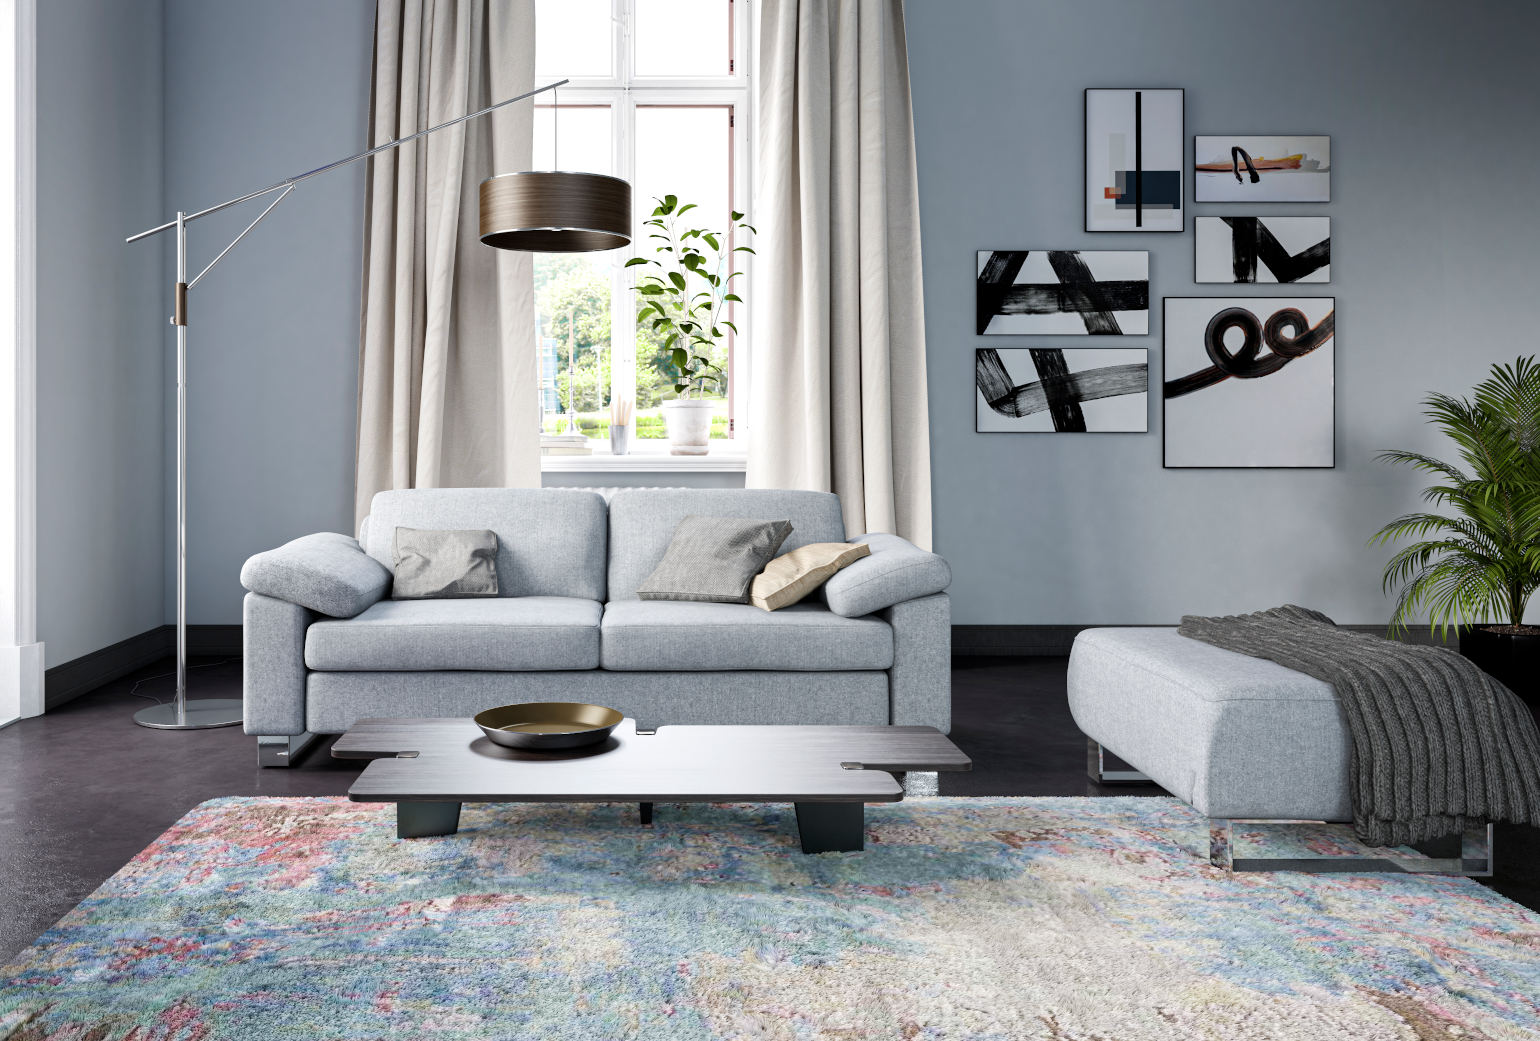 Zweisitzer-Sofa in grau